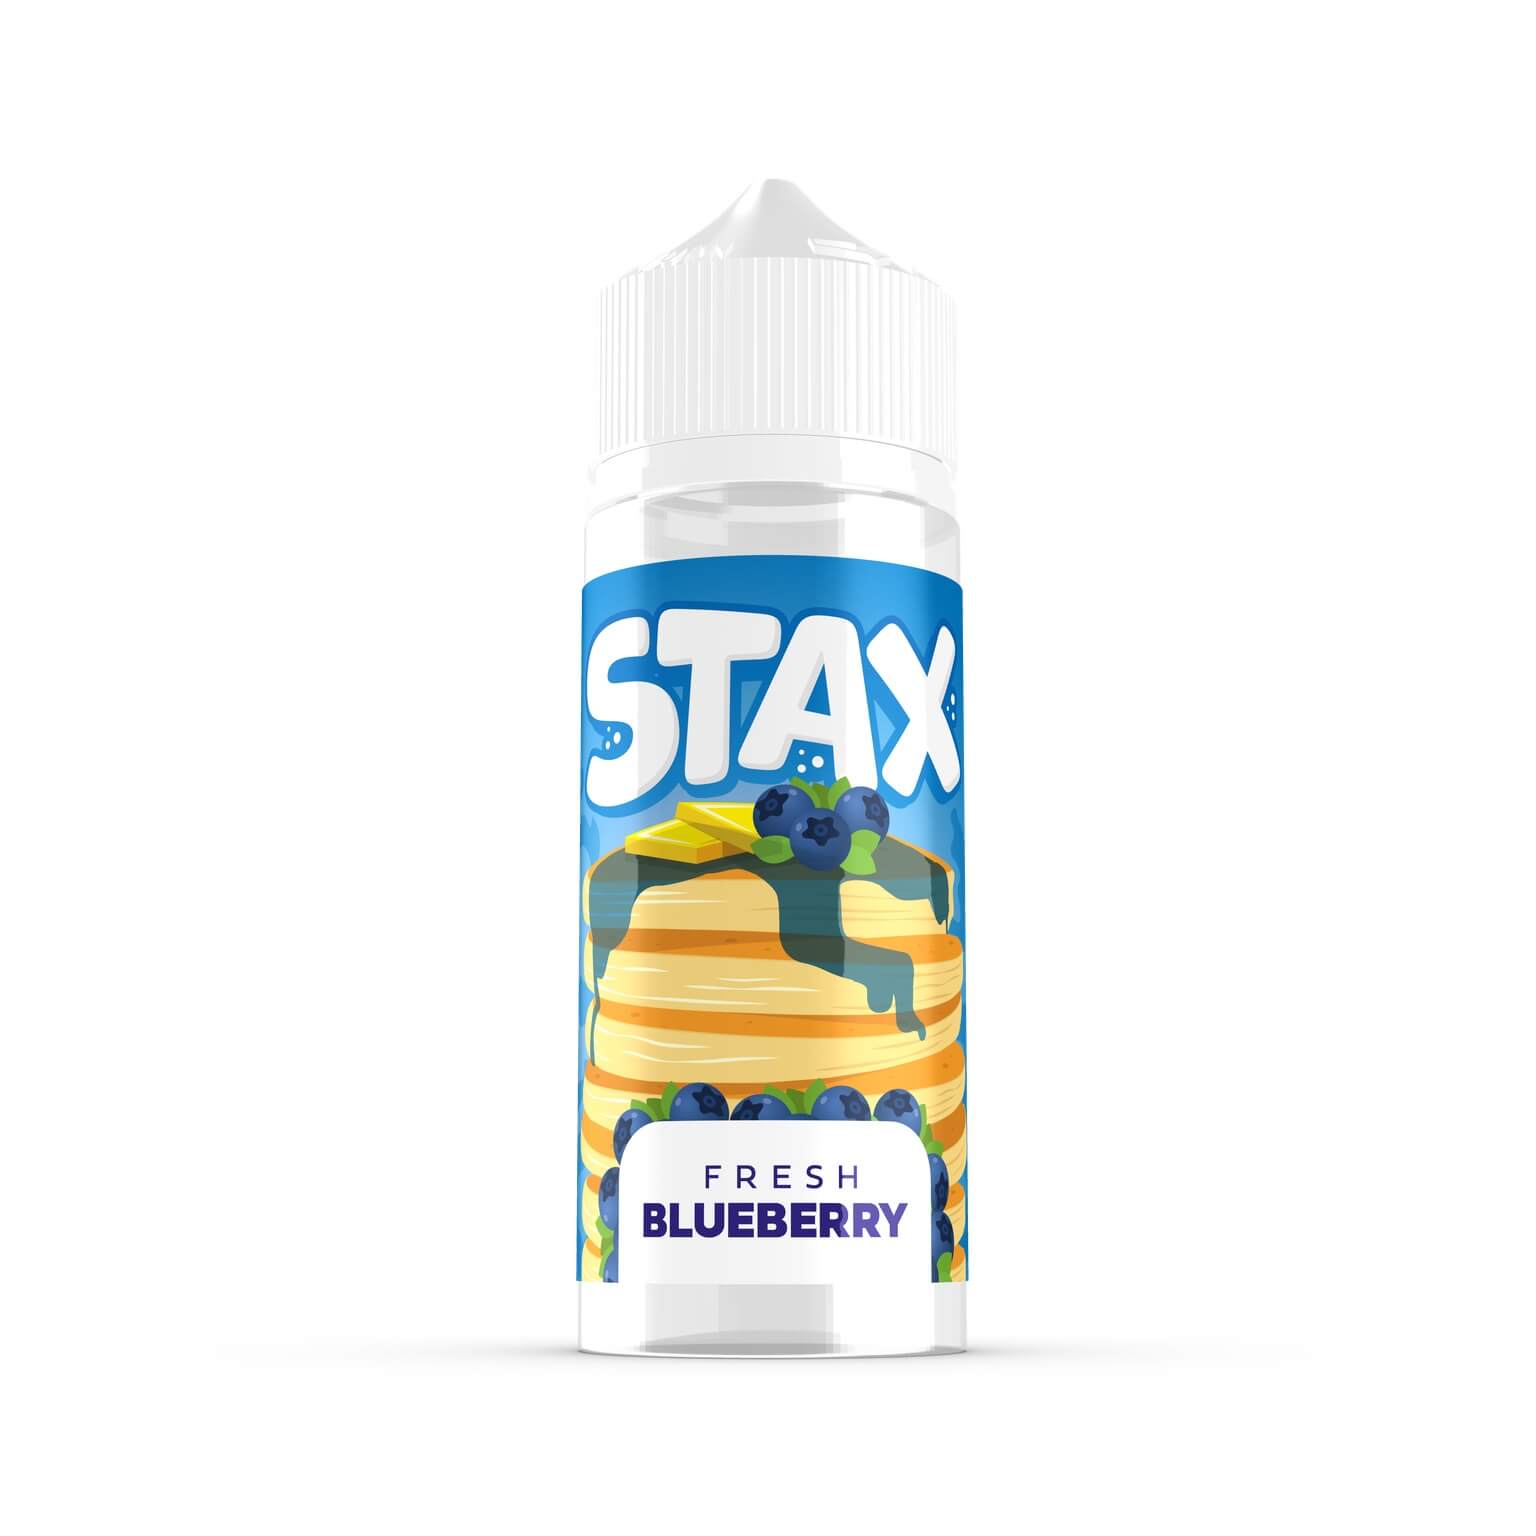 Stax fresh blueberry 100ml shortfill e-liquid available at dispergo vaping uk